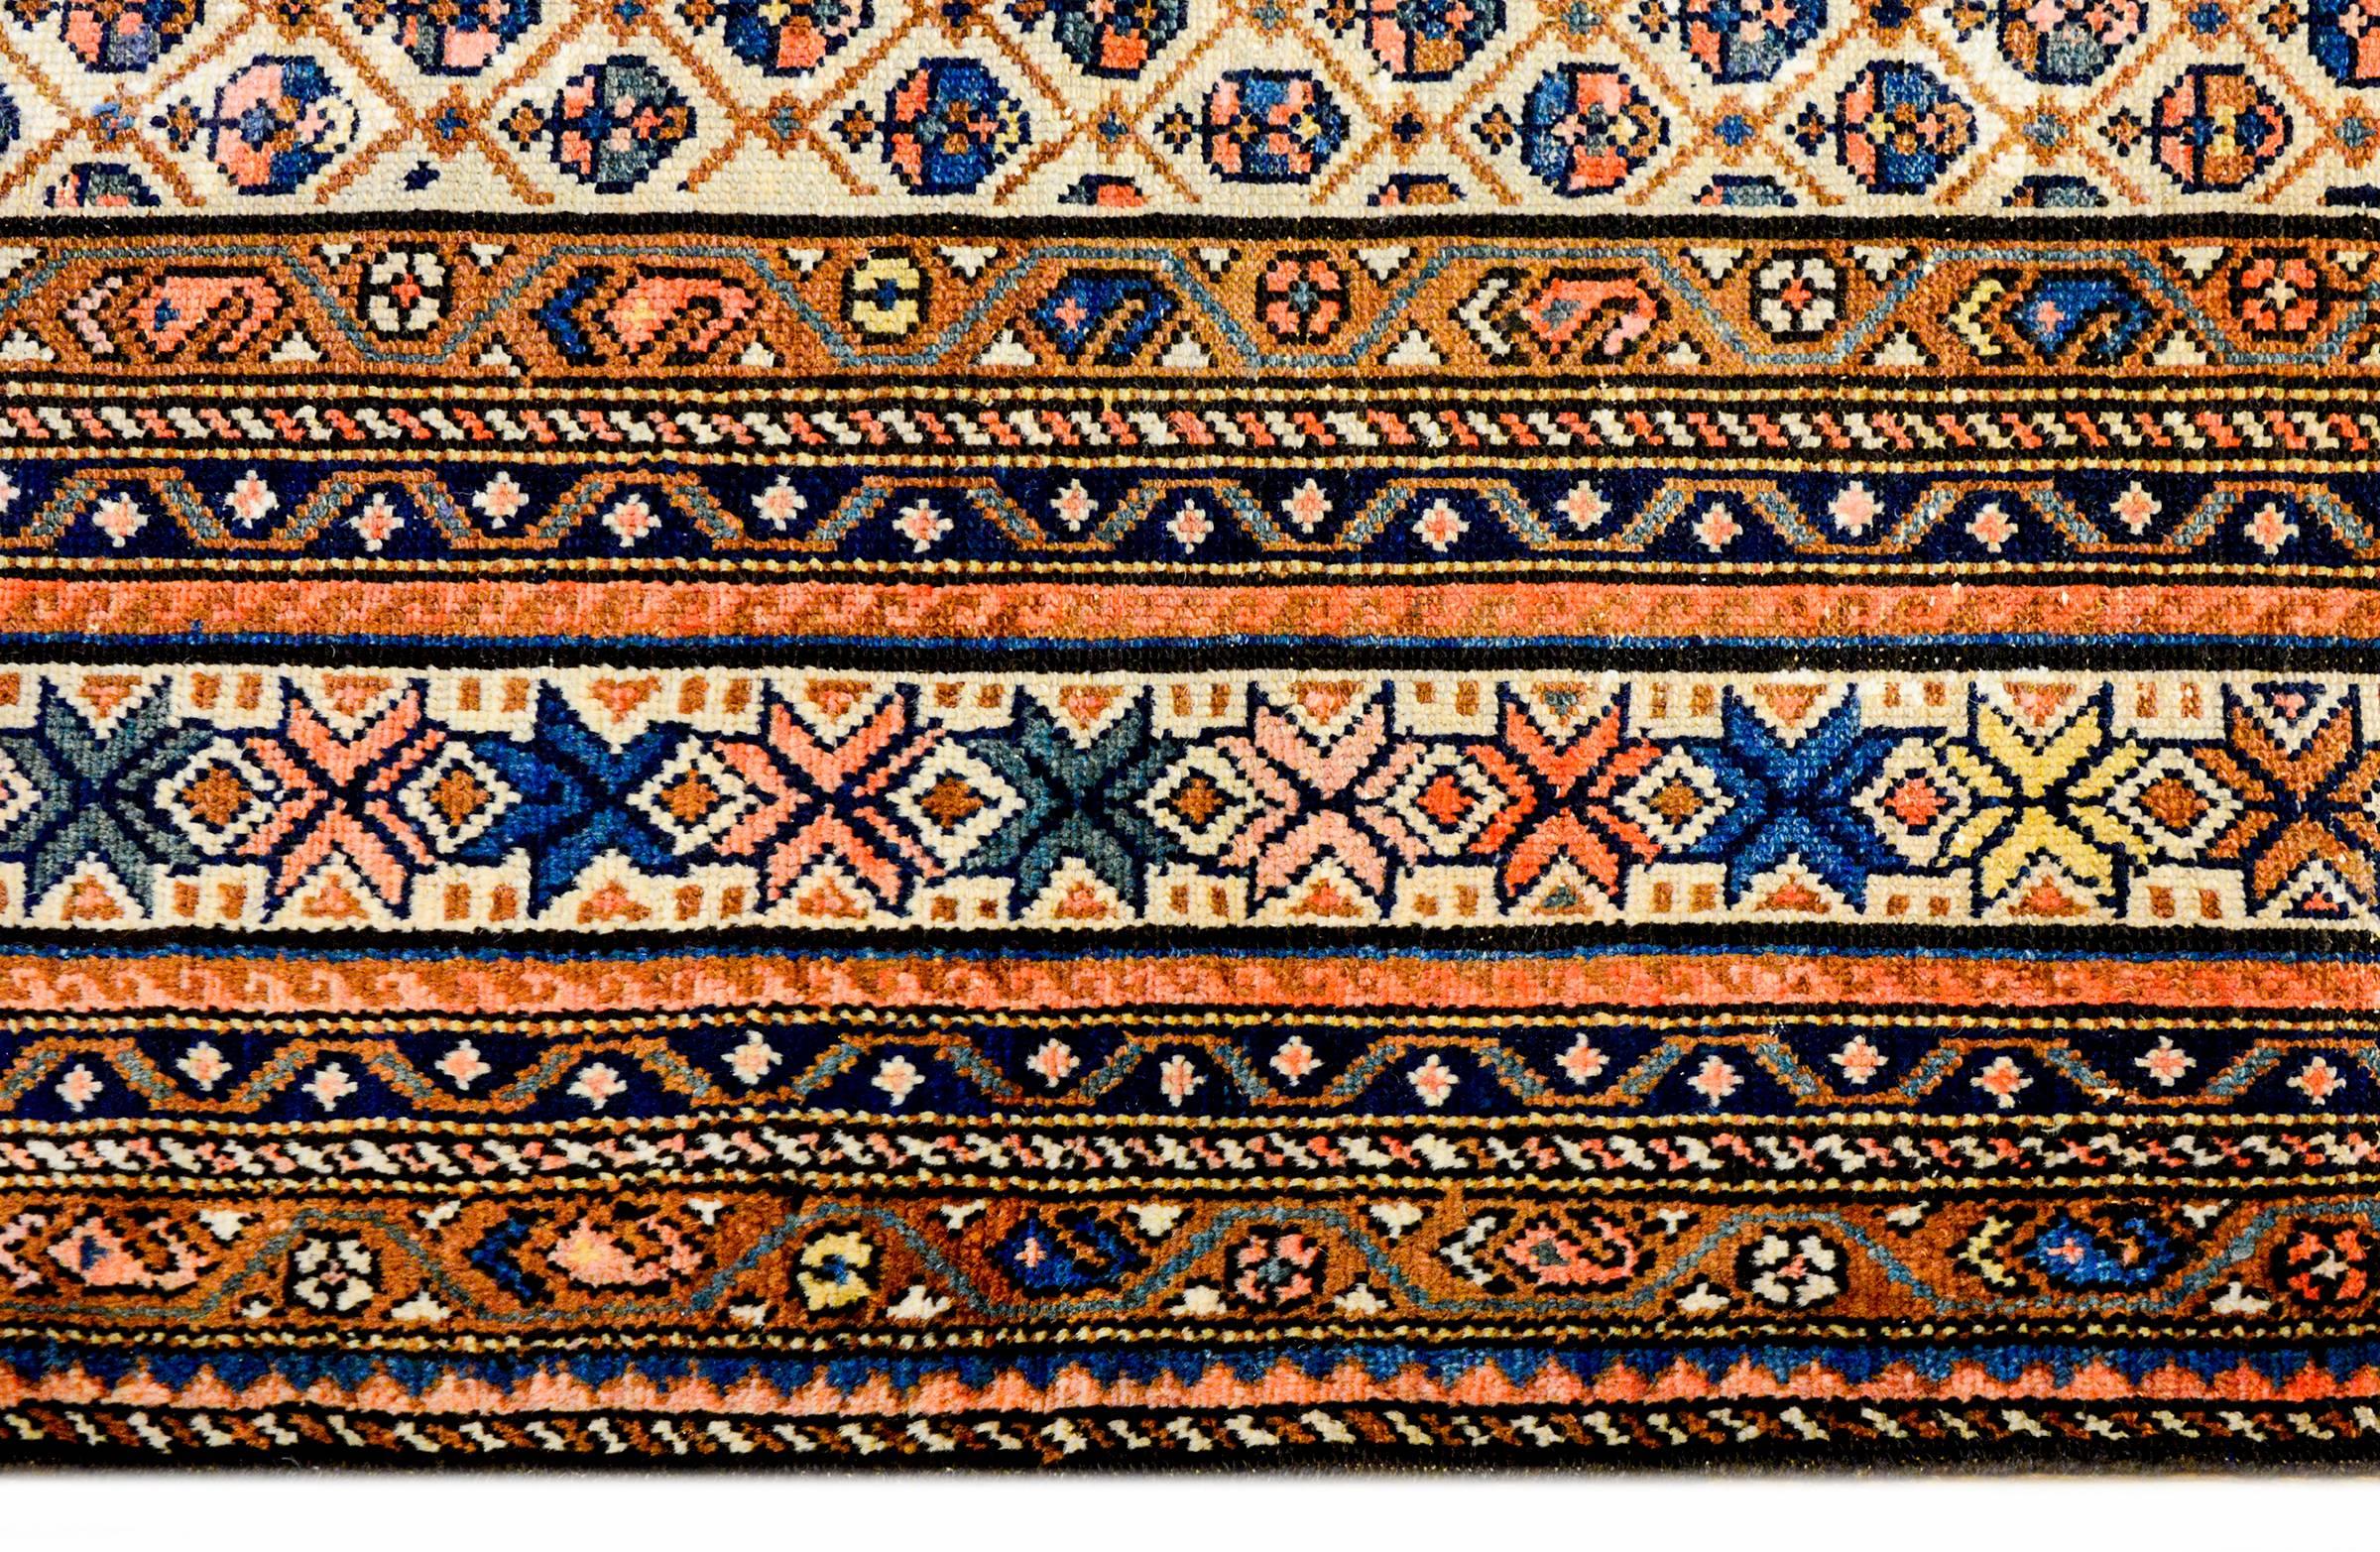 Kazak Exquisite 19th Century Malayer Rug For Sale